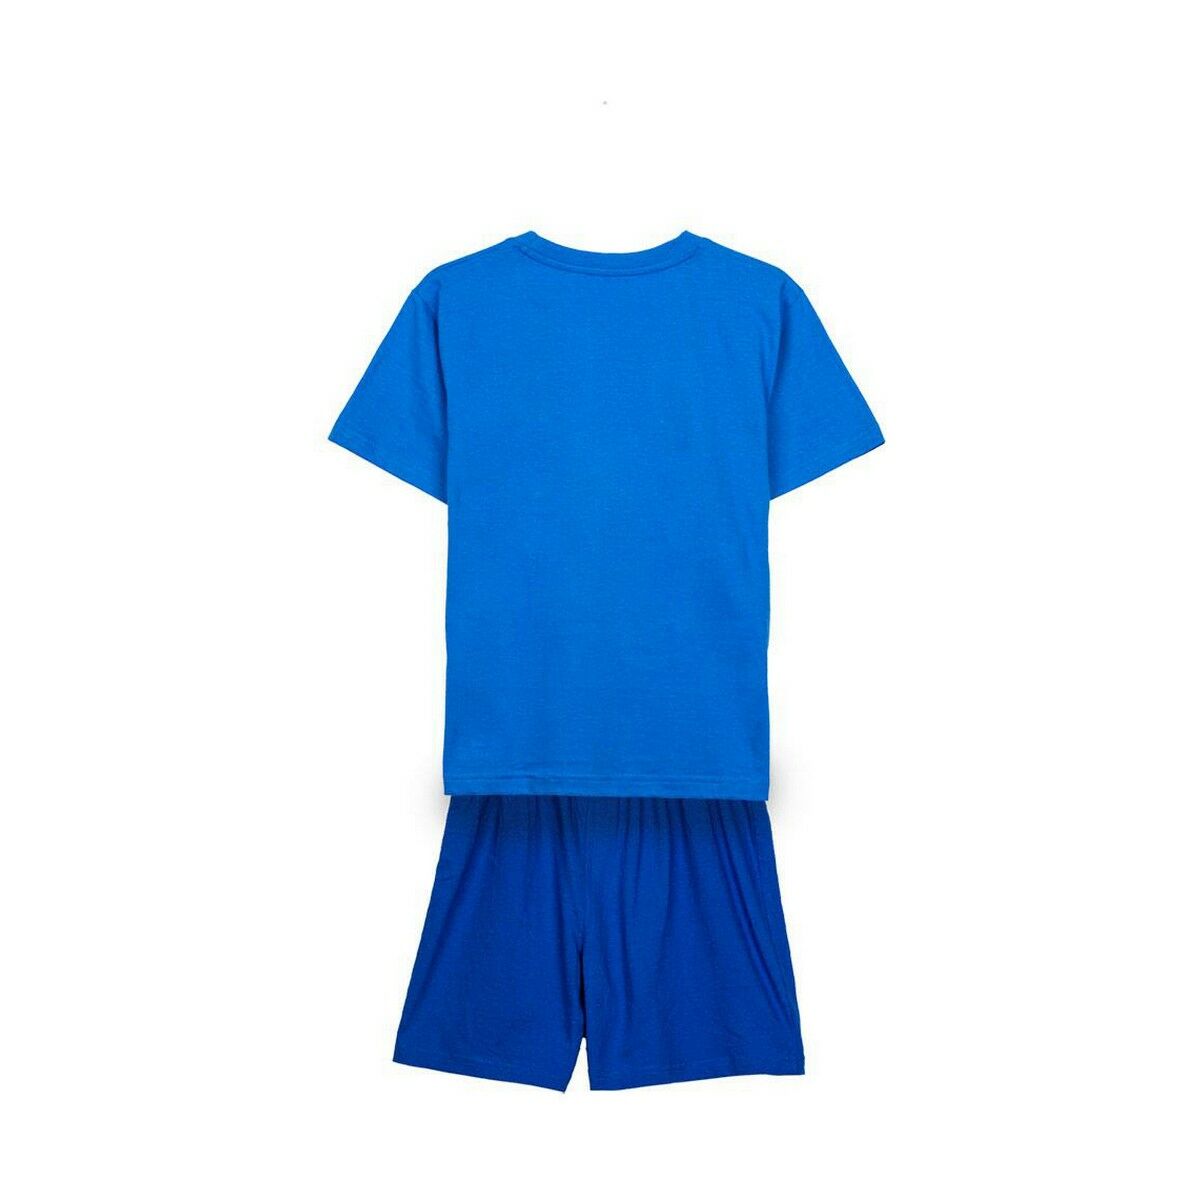 Children's Pyjama Sonic Dark blue